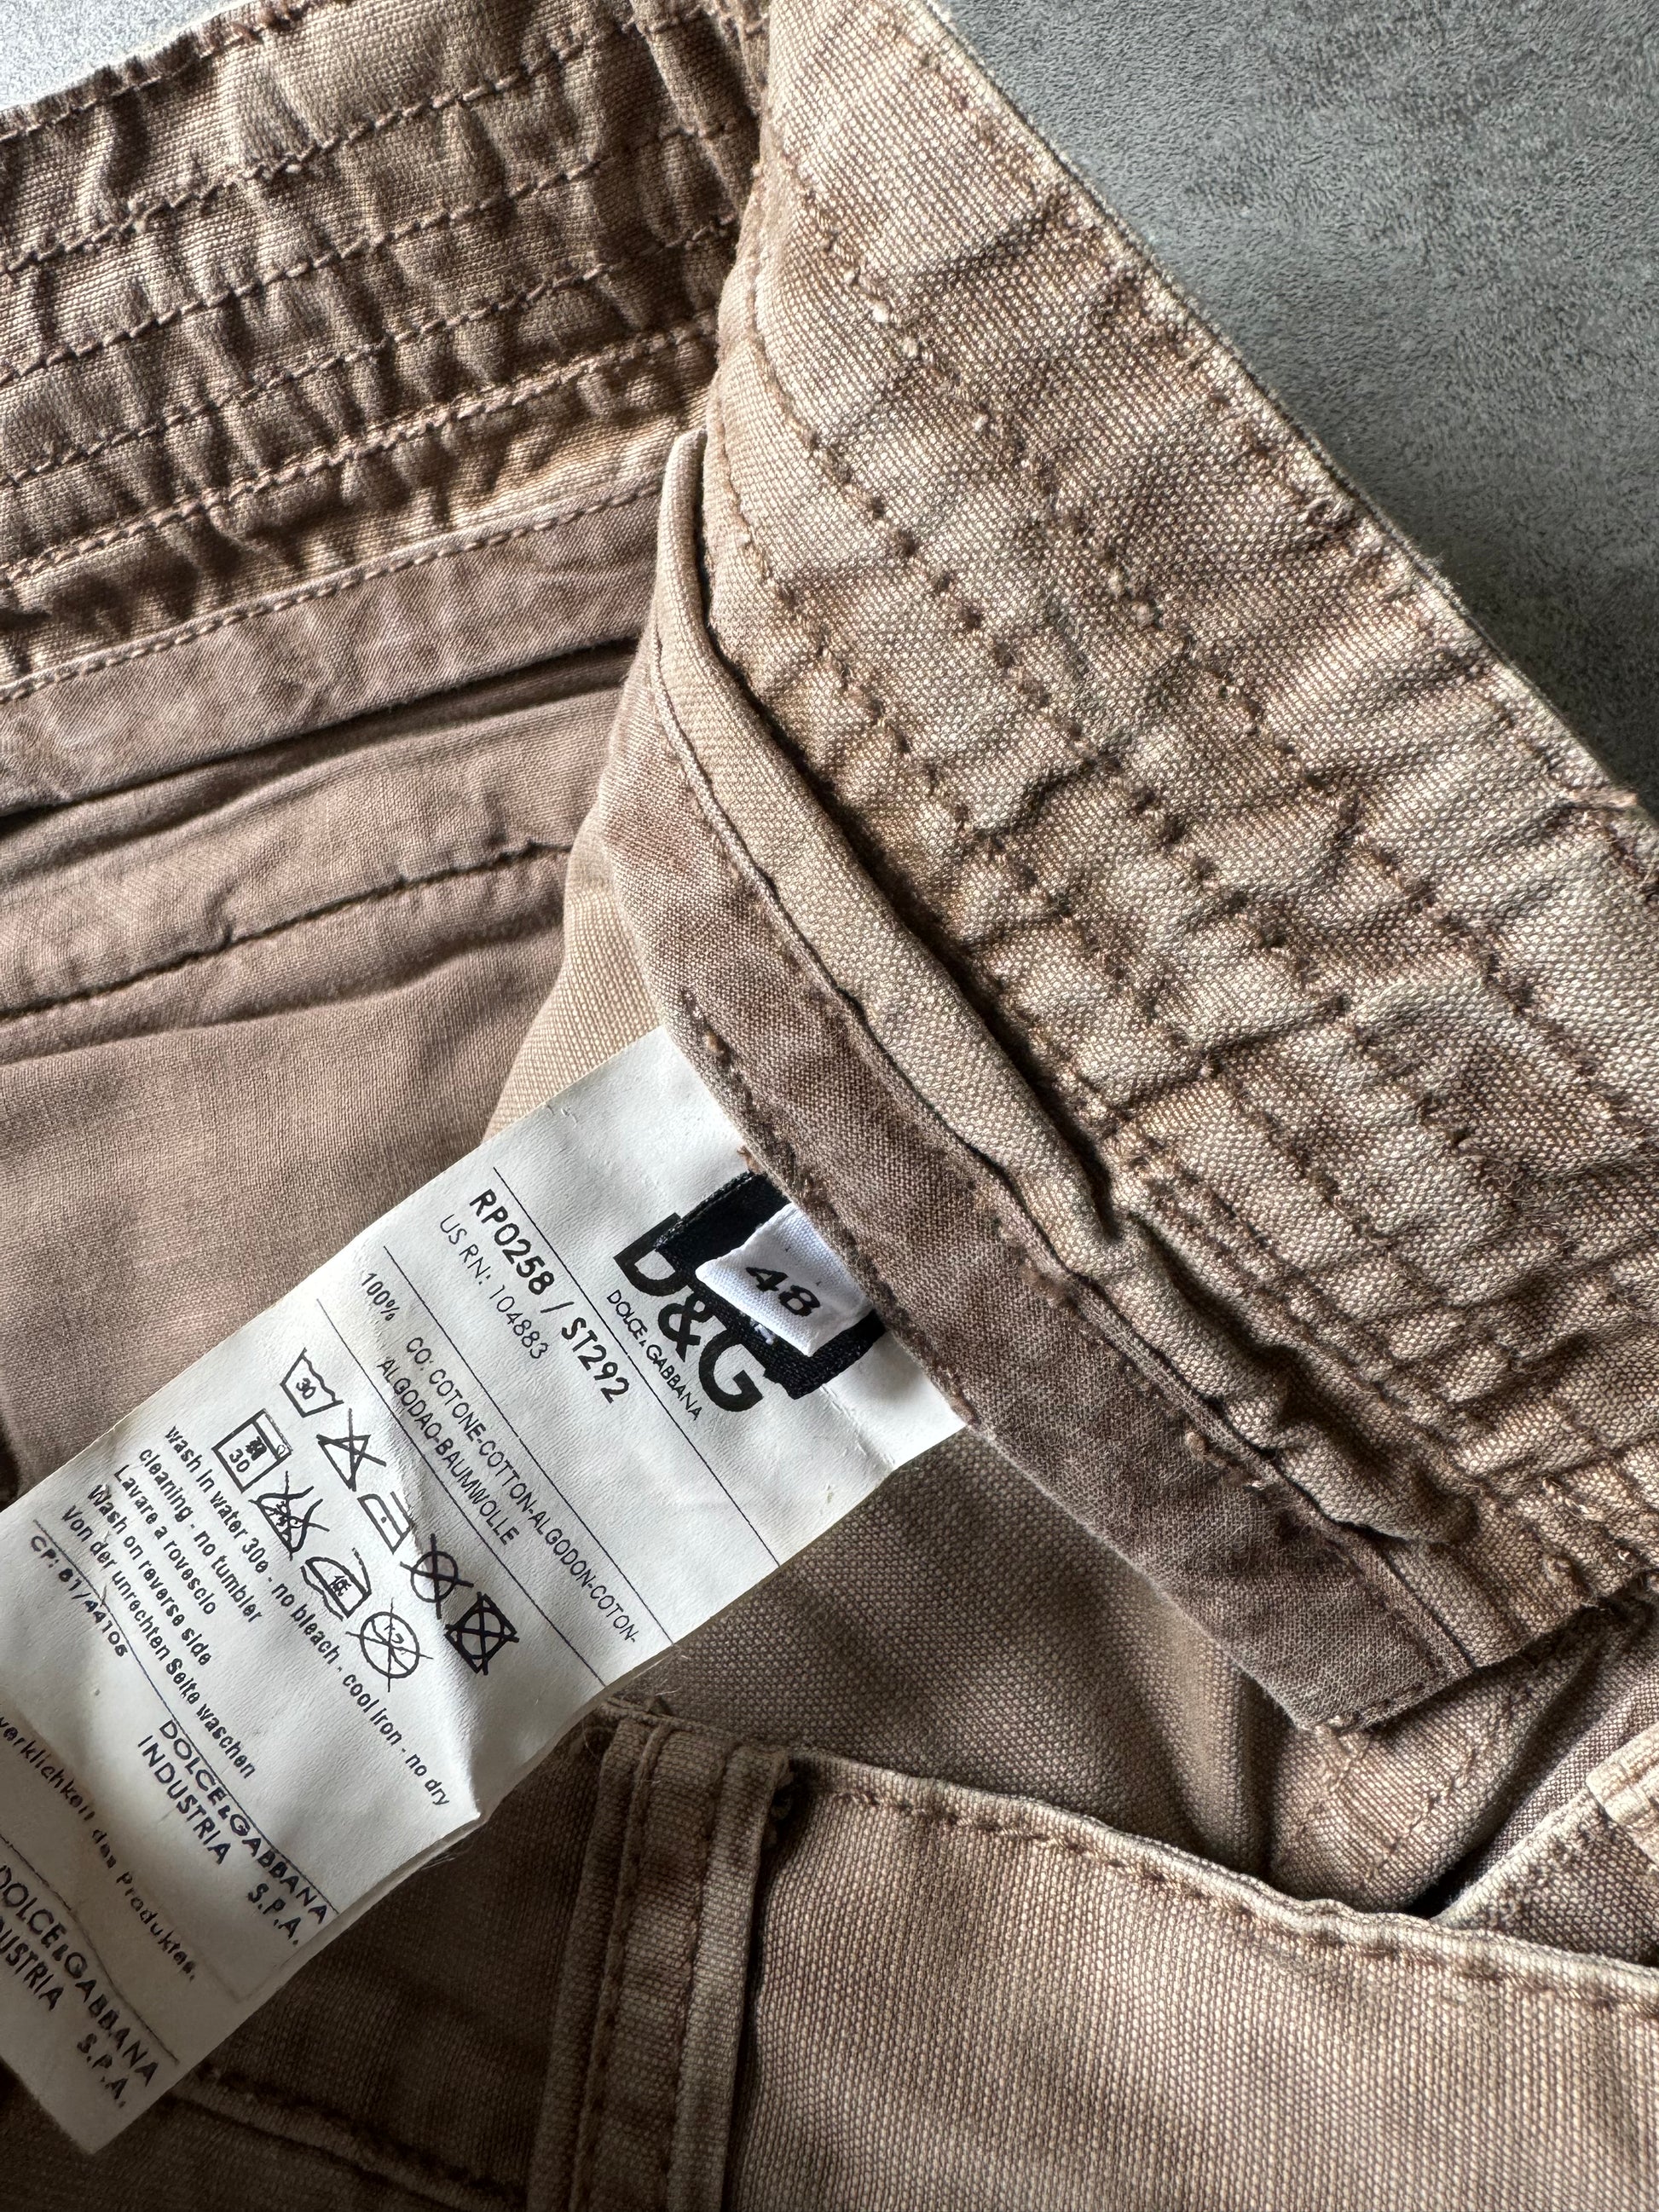 FW2006 Dolce & Gabbana Cargo Army Pants (L) - 7